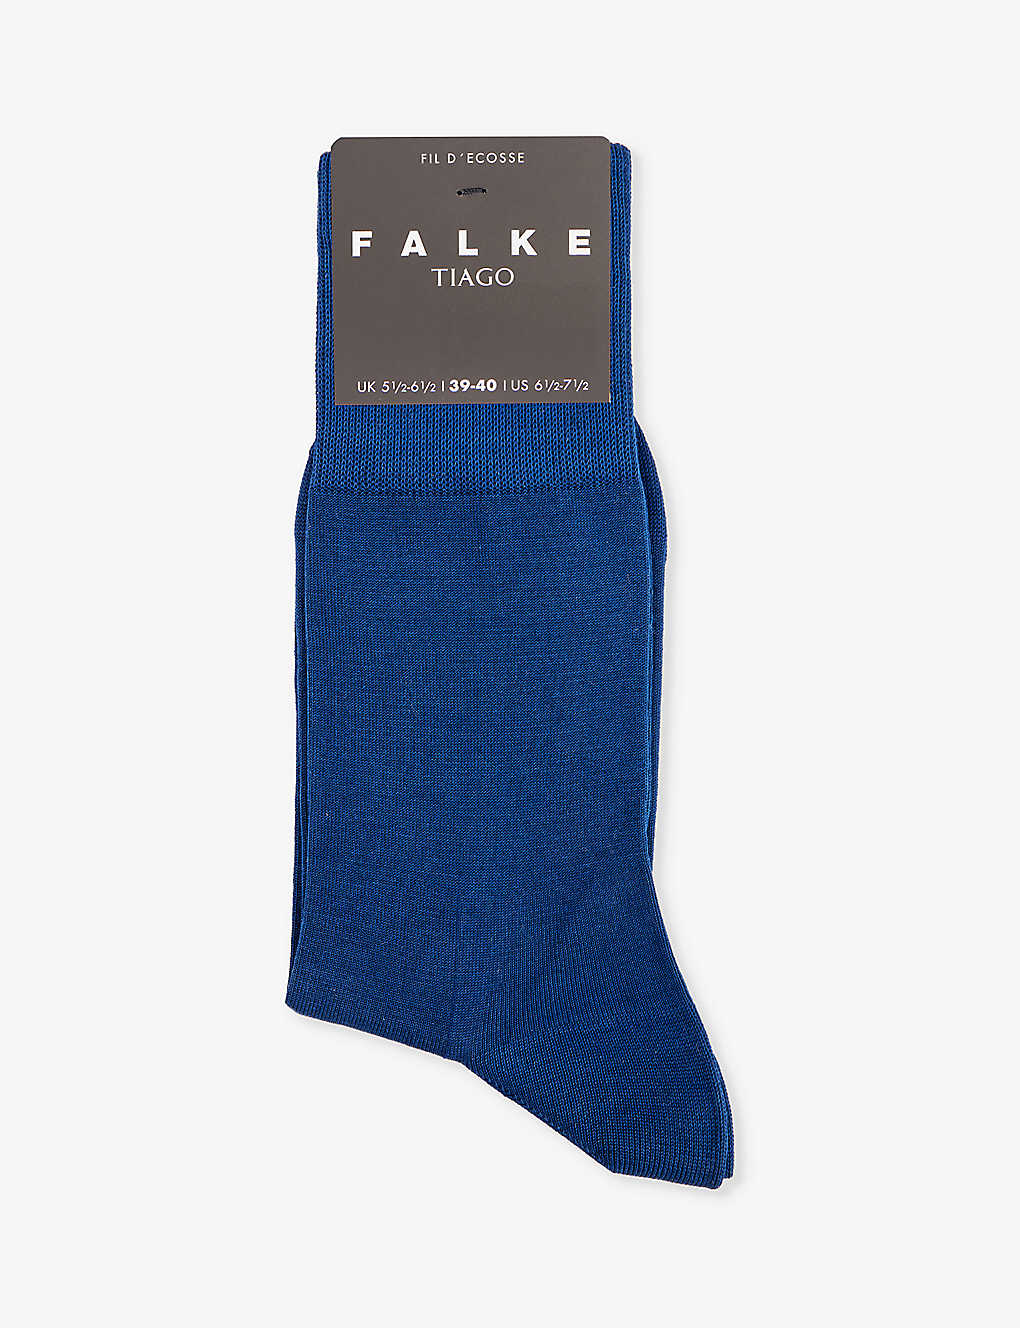 Falke Mens Royal Blue Tiago Cotton-blend Socks